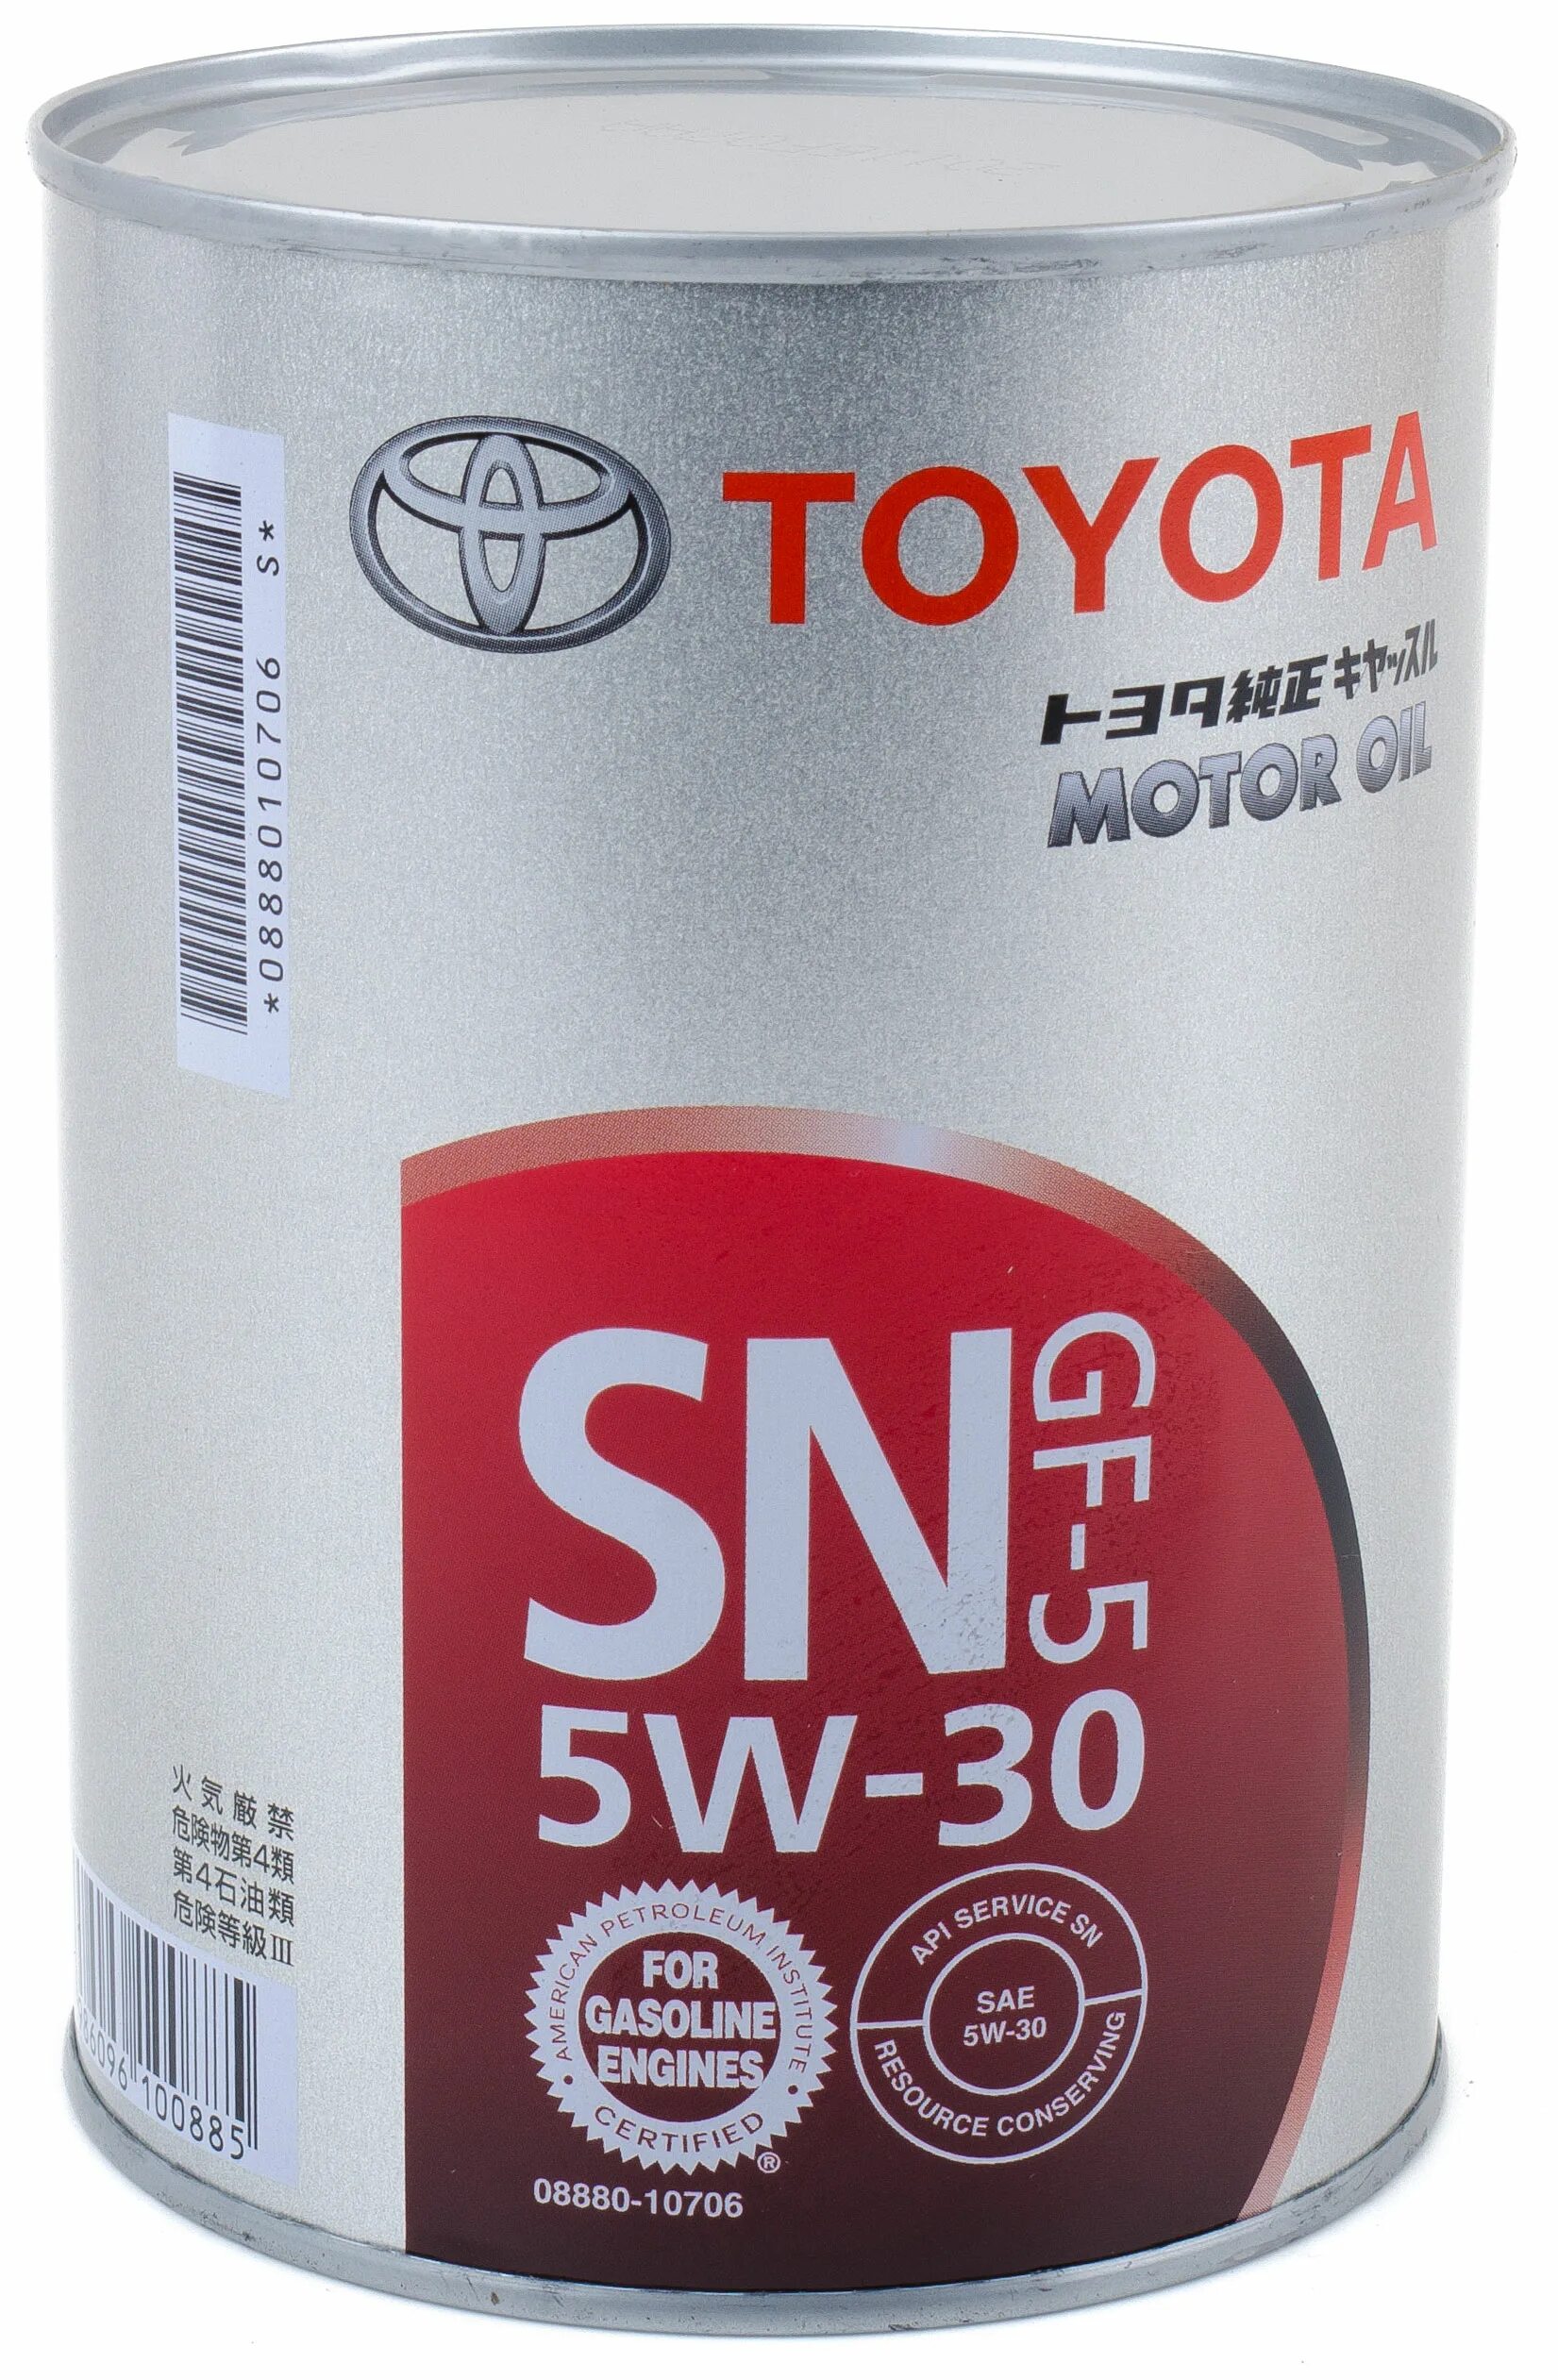 Toyota 5w-30 SN gf-5. Toyota SN/gf-5 5w-30 1л. Toyota Motor Oil SN SF-5 5w30. Toyota 08880-10706.